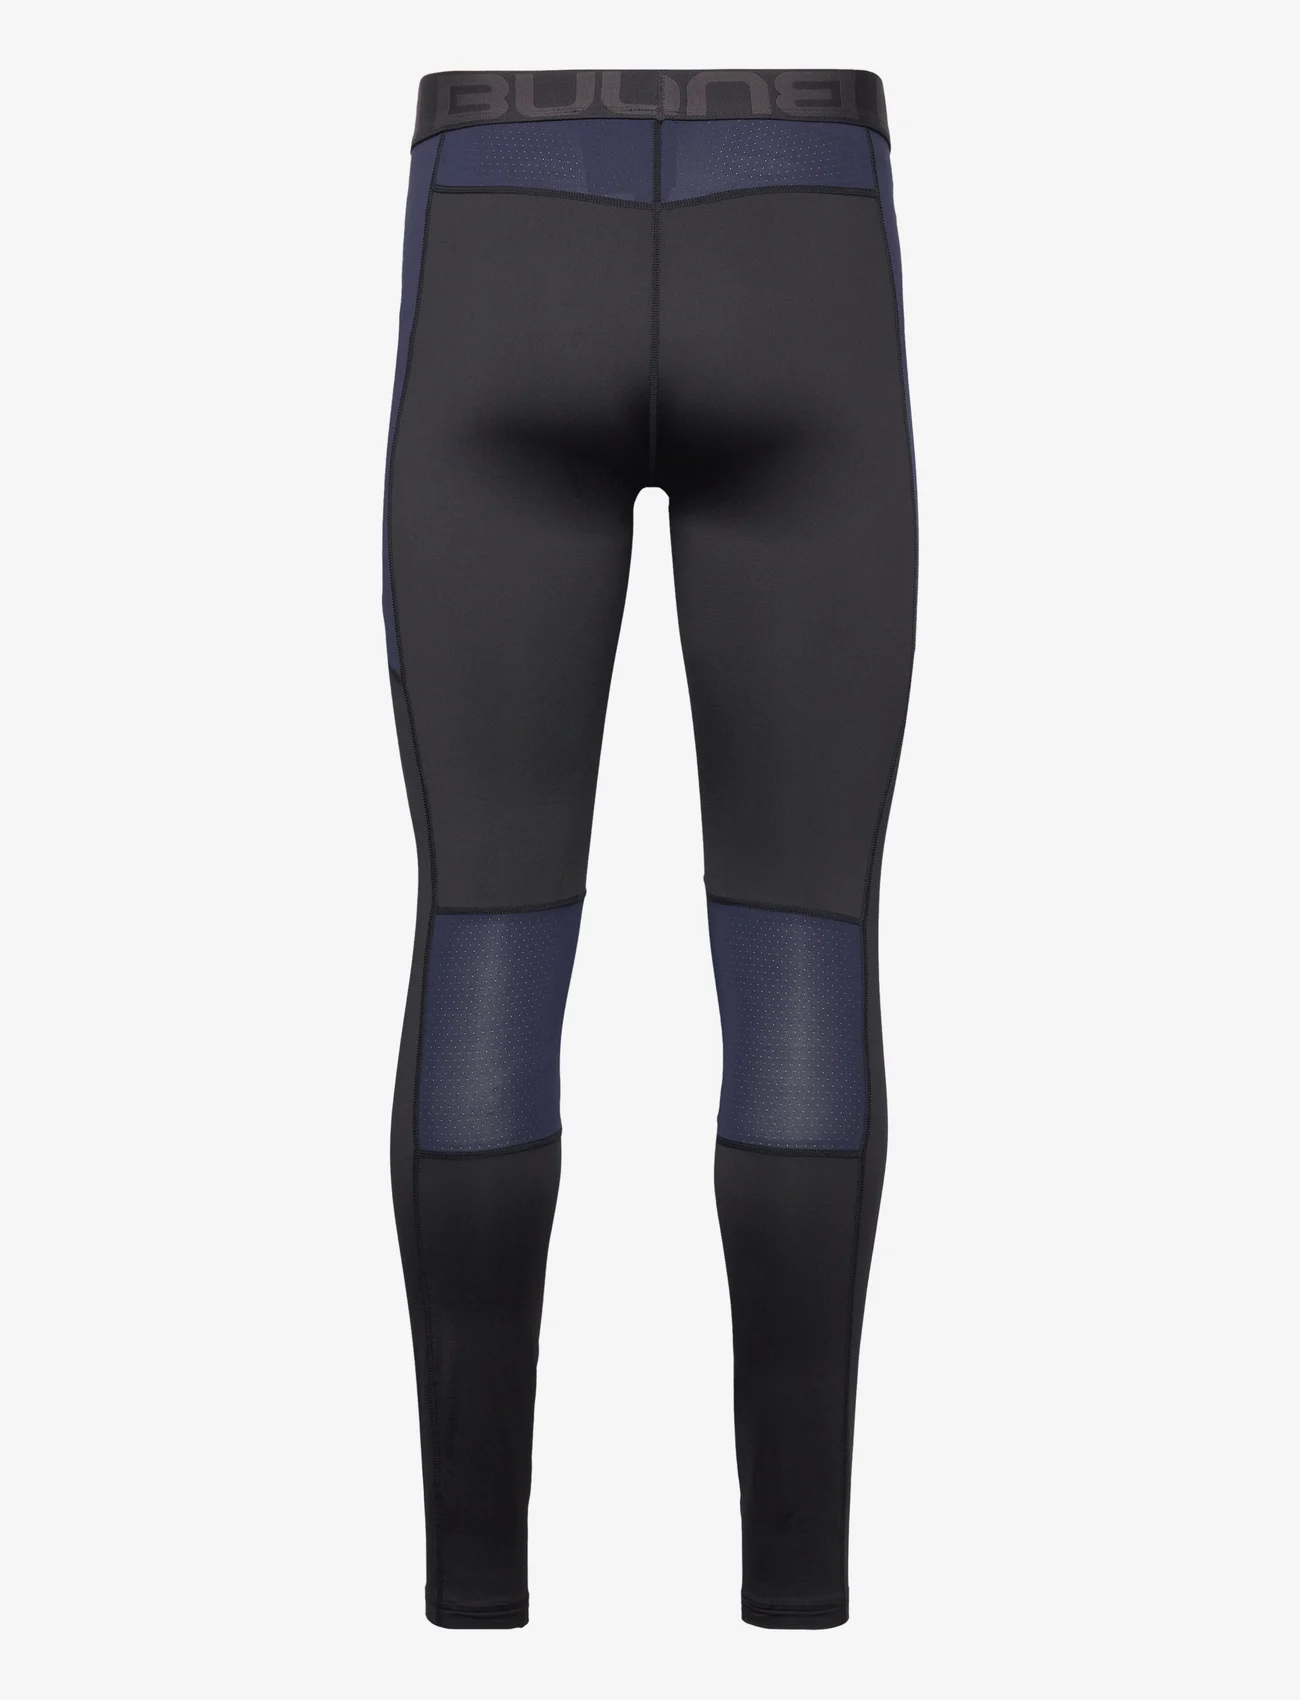 Bula - FlexTech Pants 2.0 - spodnie termoaktywne - black - 1